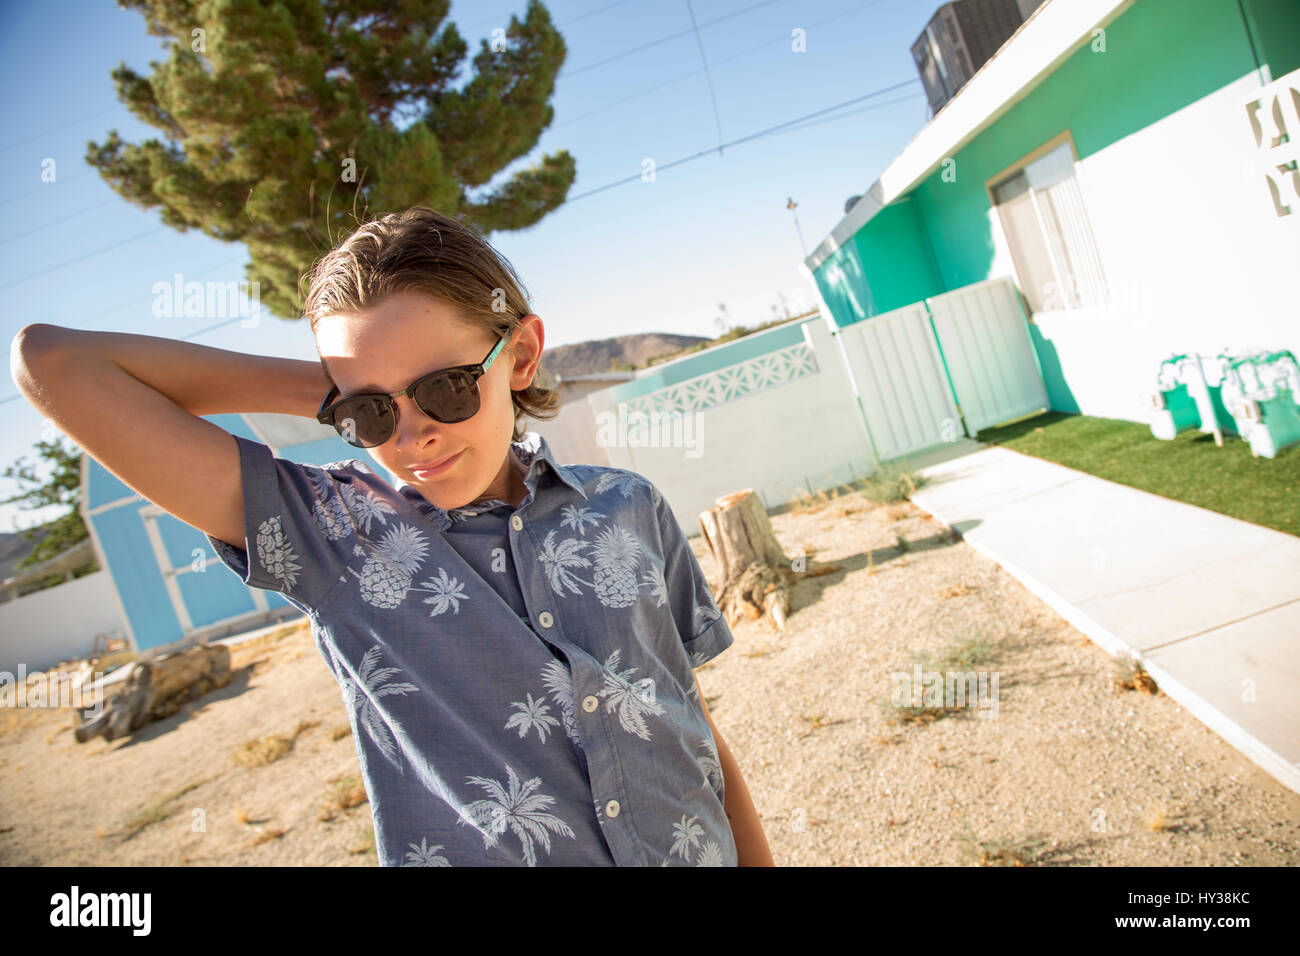 USA, California, Boy (14-15) wearing sunglasses standing outside of house Stock Photo